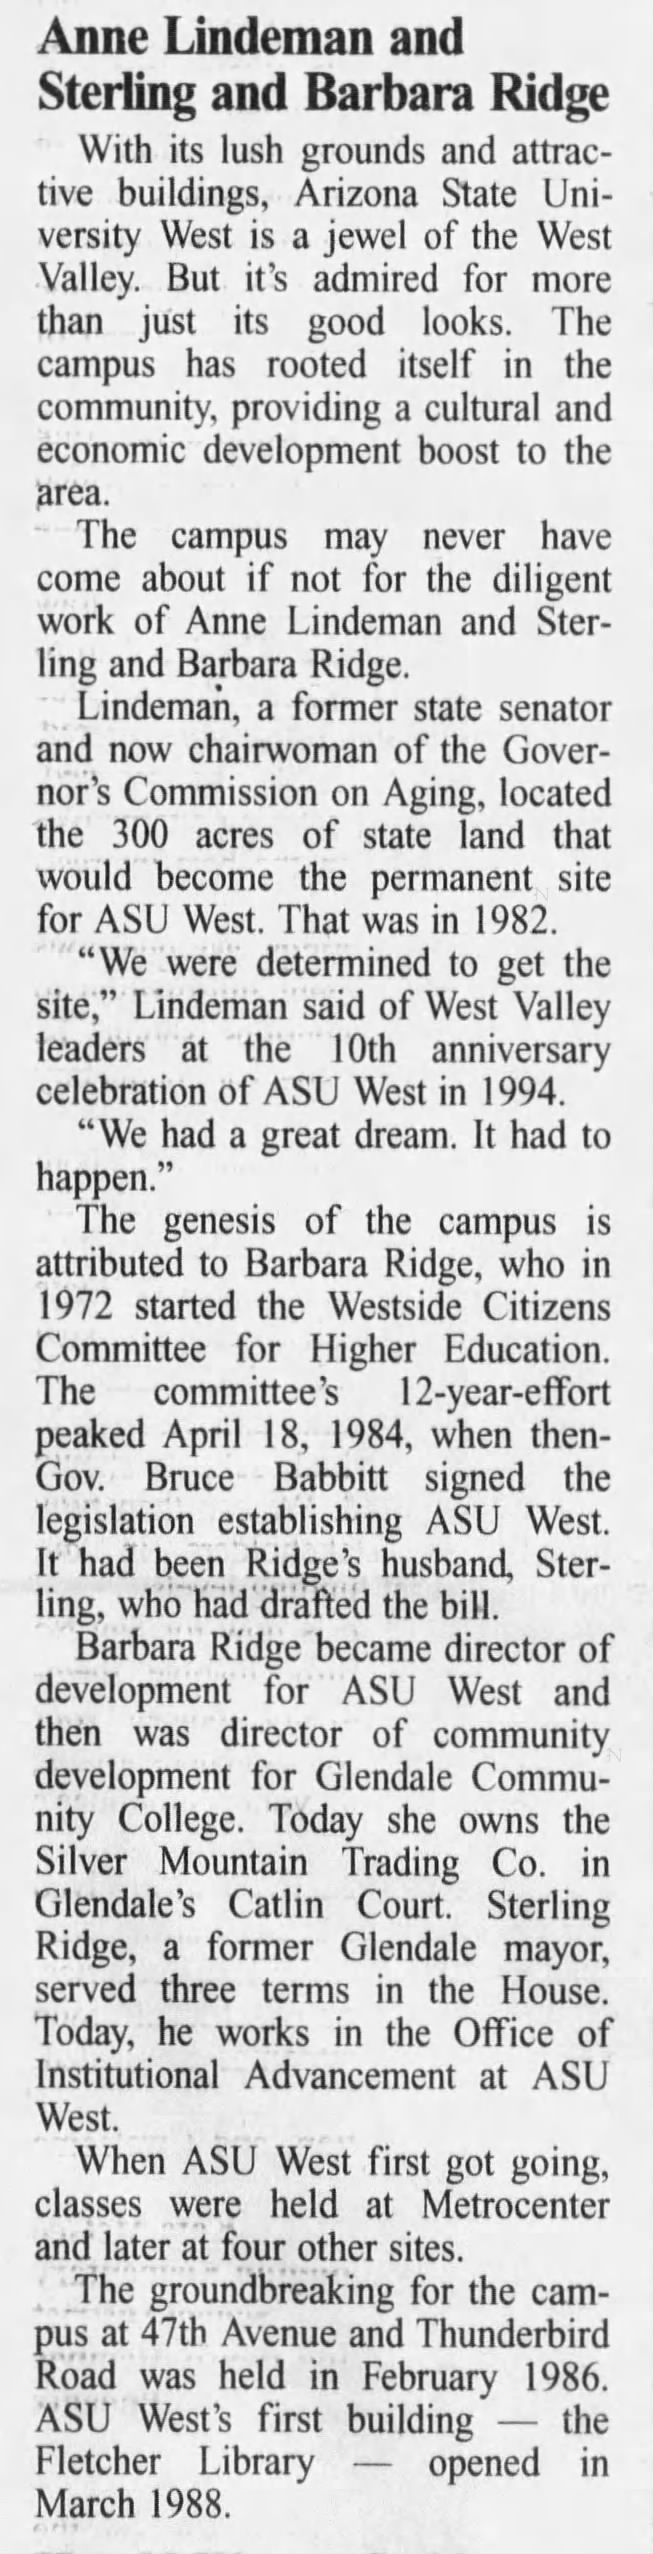 Arizona Republic, Dec. 24 1999